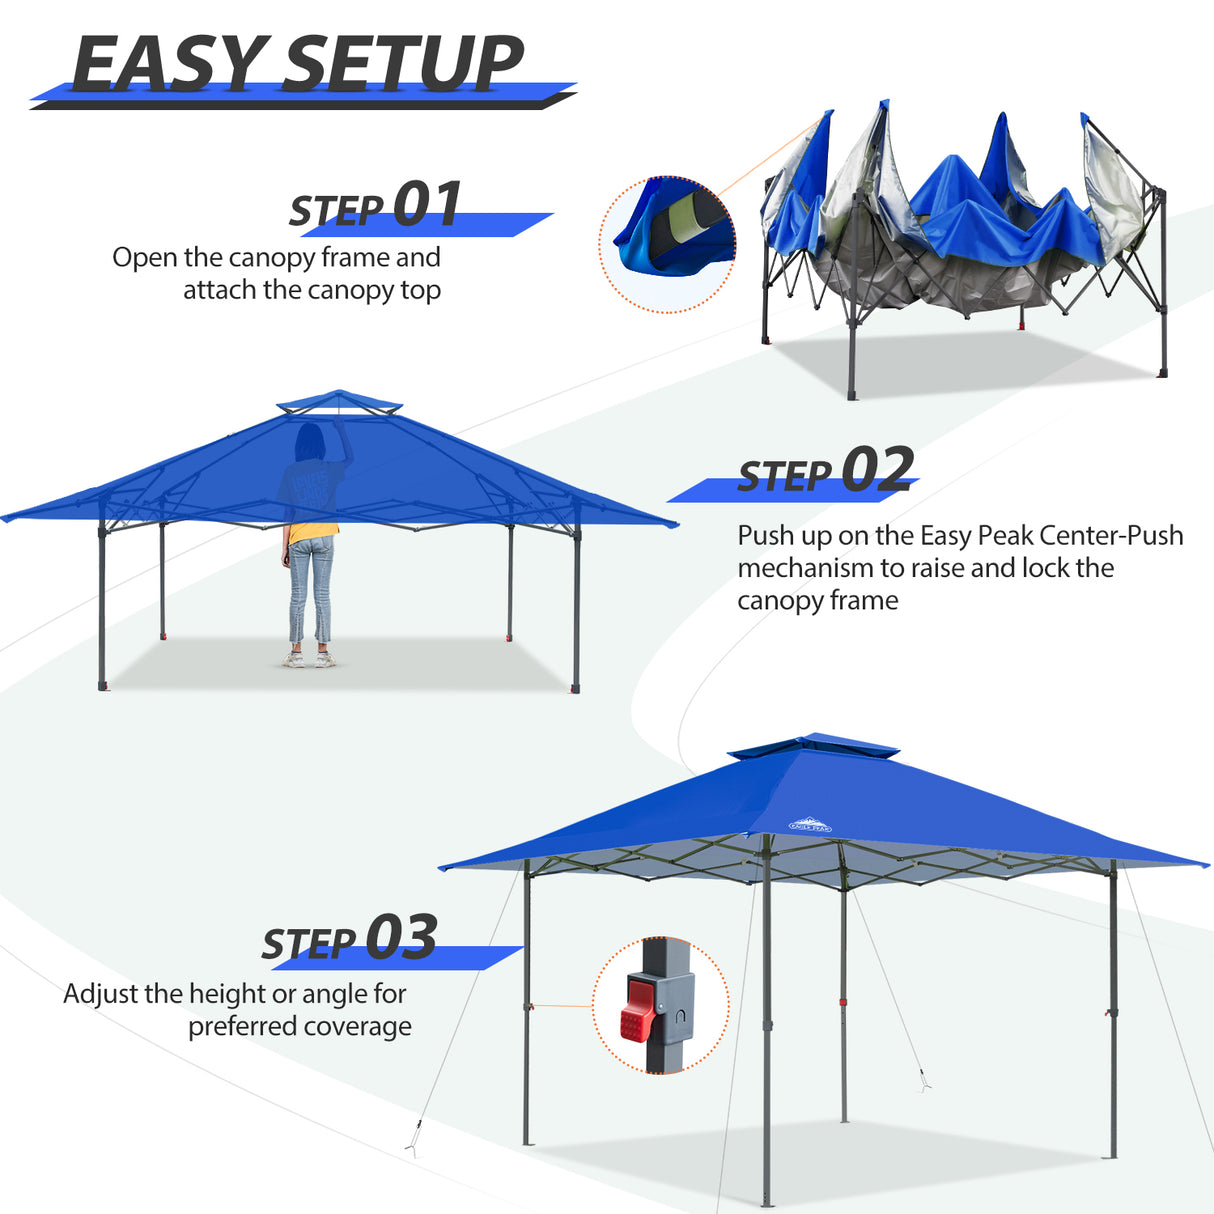 EAGLE PEAK 13x13 Straight Leg Pop Up Canopy Tent